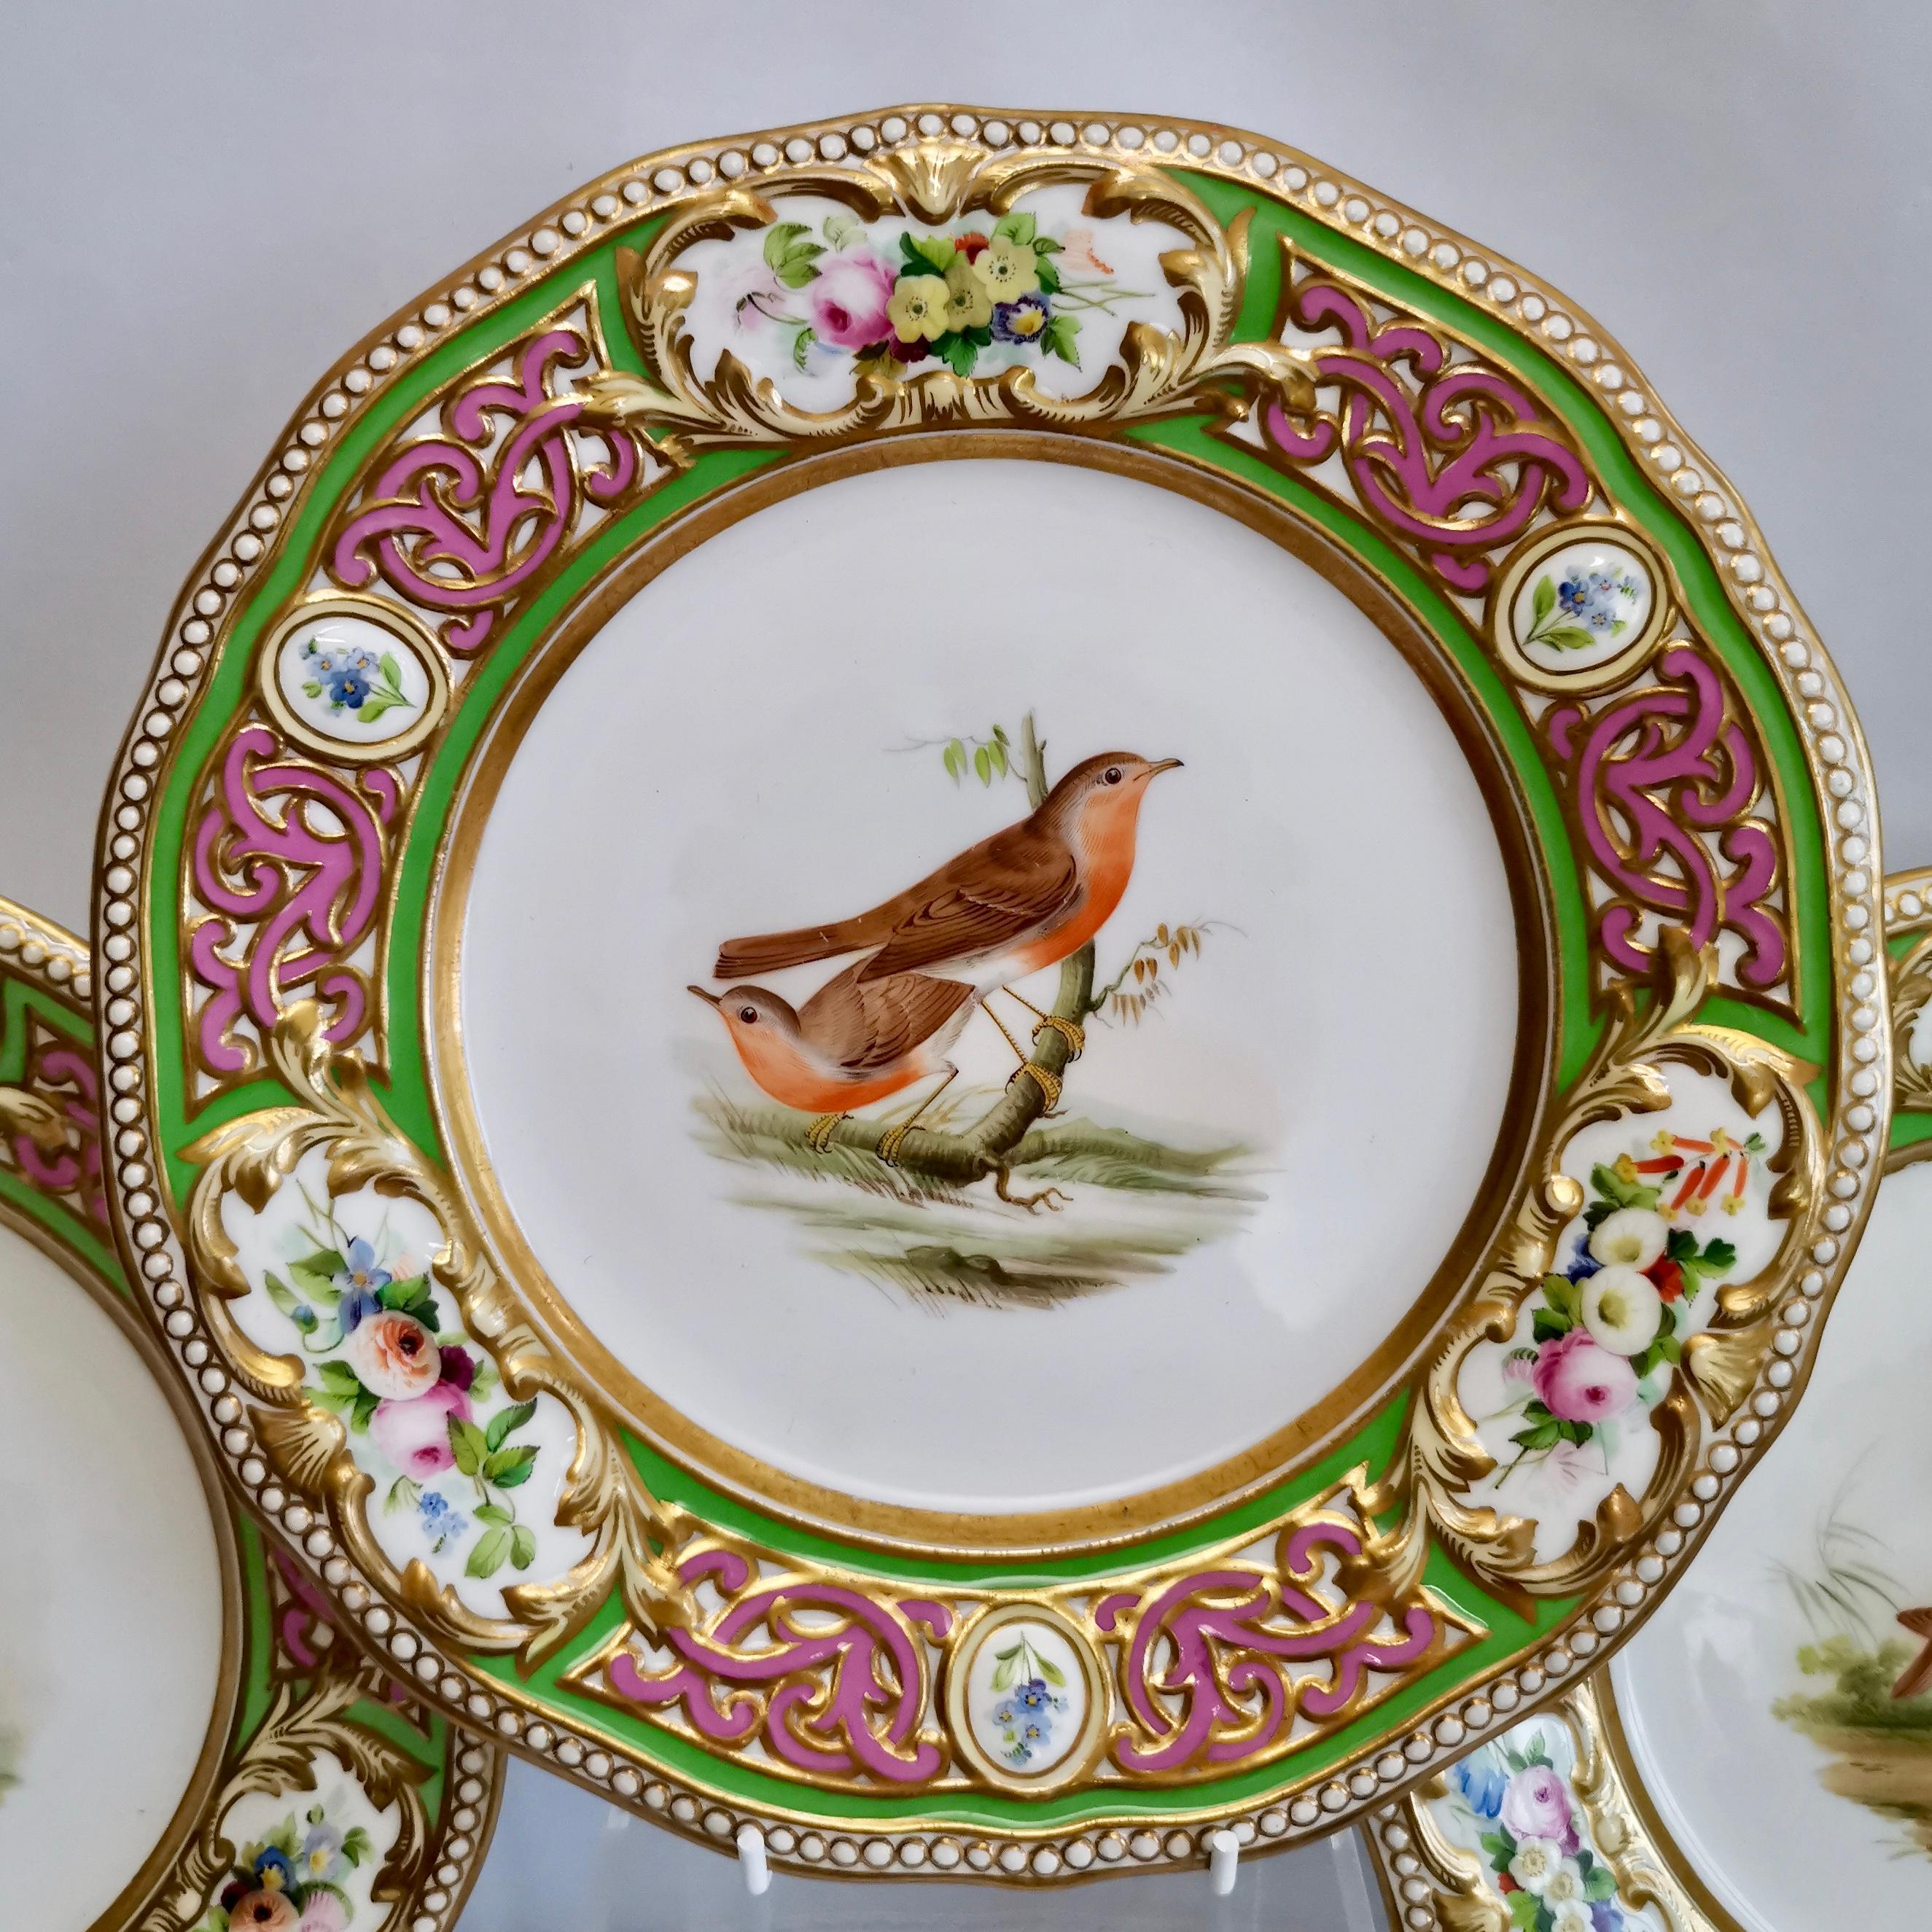 English Grainger Worcester Porcelain Dessert Service, Persian Revival with Birds, 1855